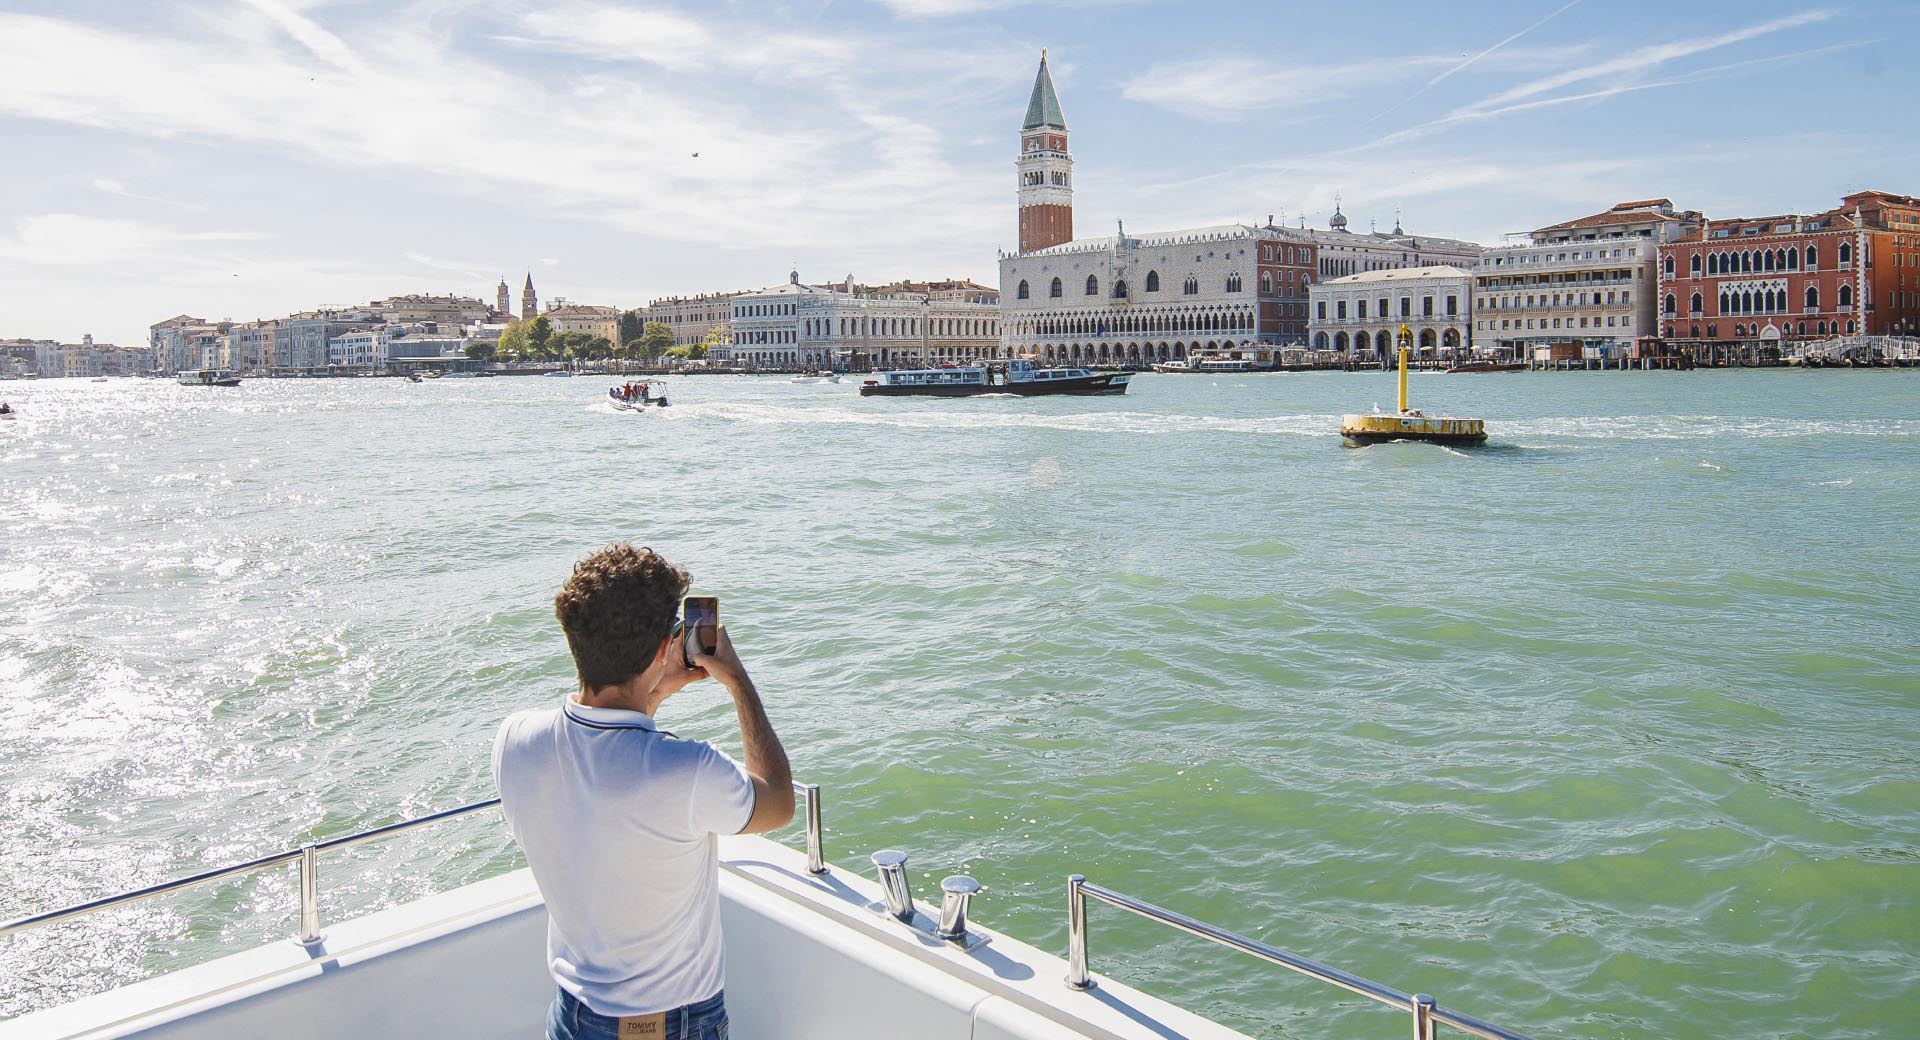 Tourist on Venetiana boat